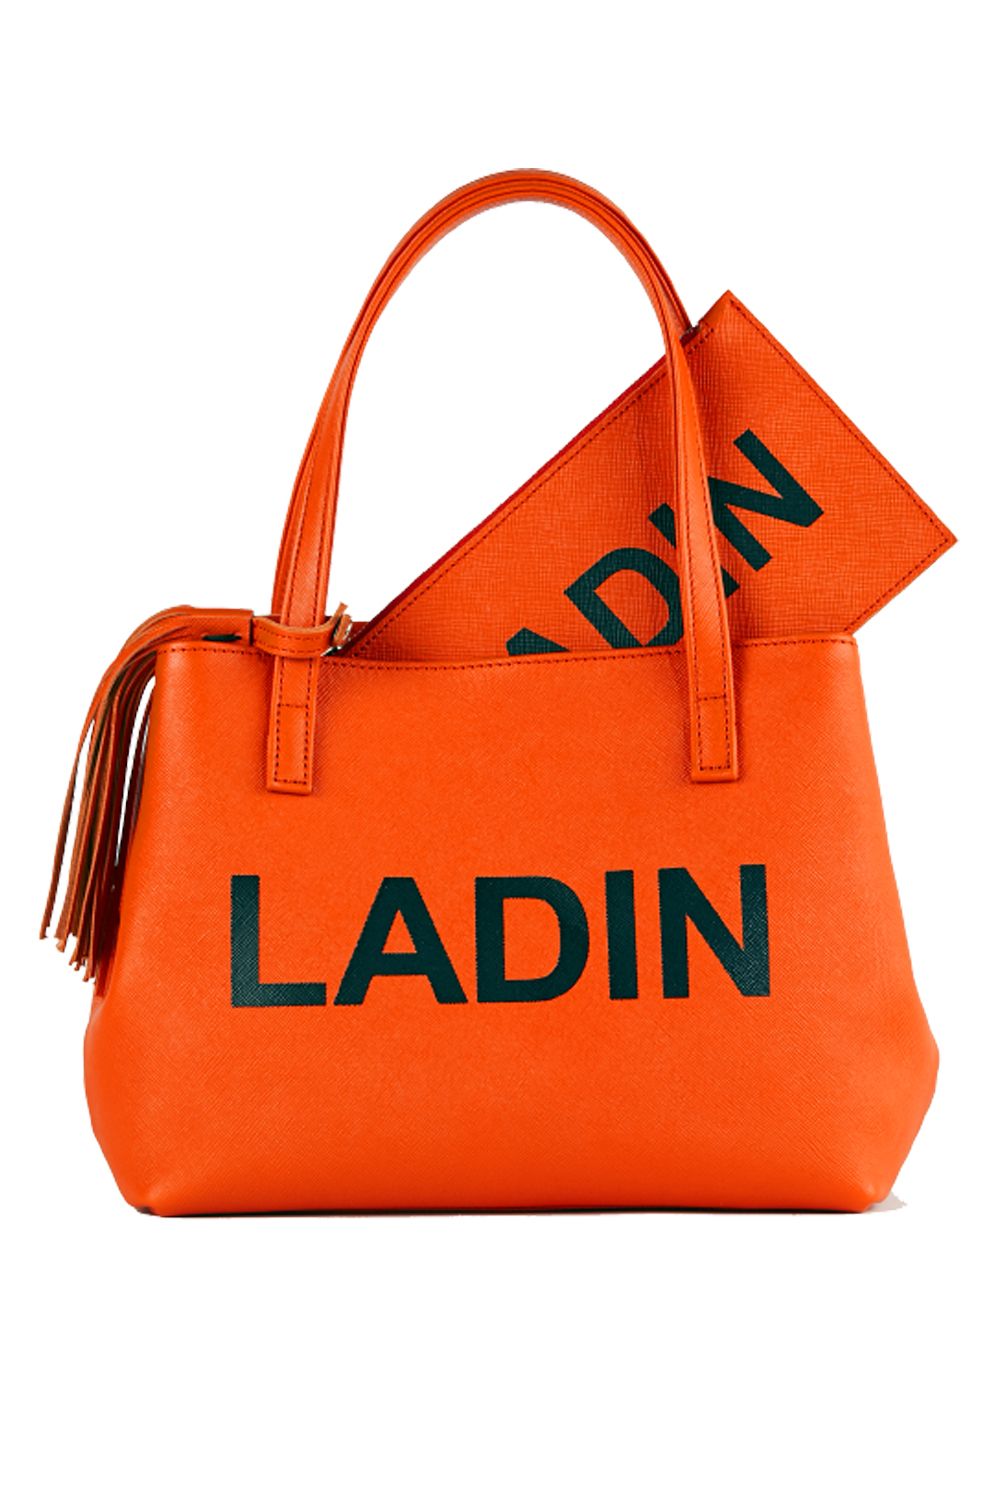 LADIN - BAG / トート型 ミニカートバッグ オレンジ | GOSSIP GOLF